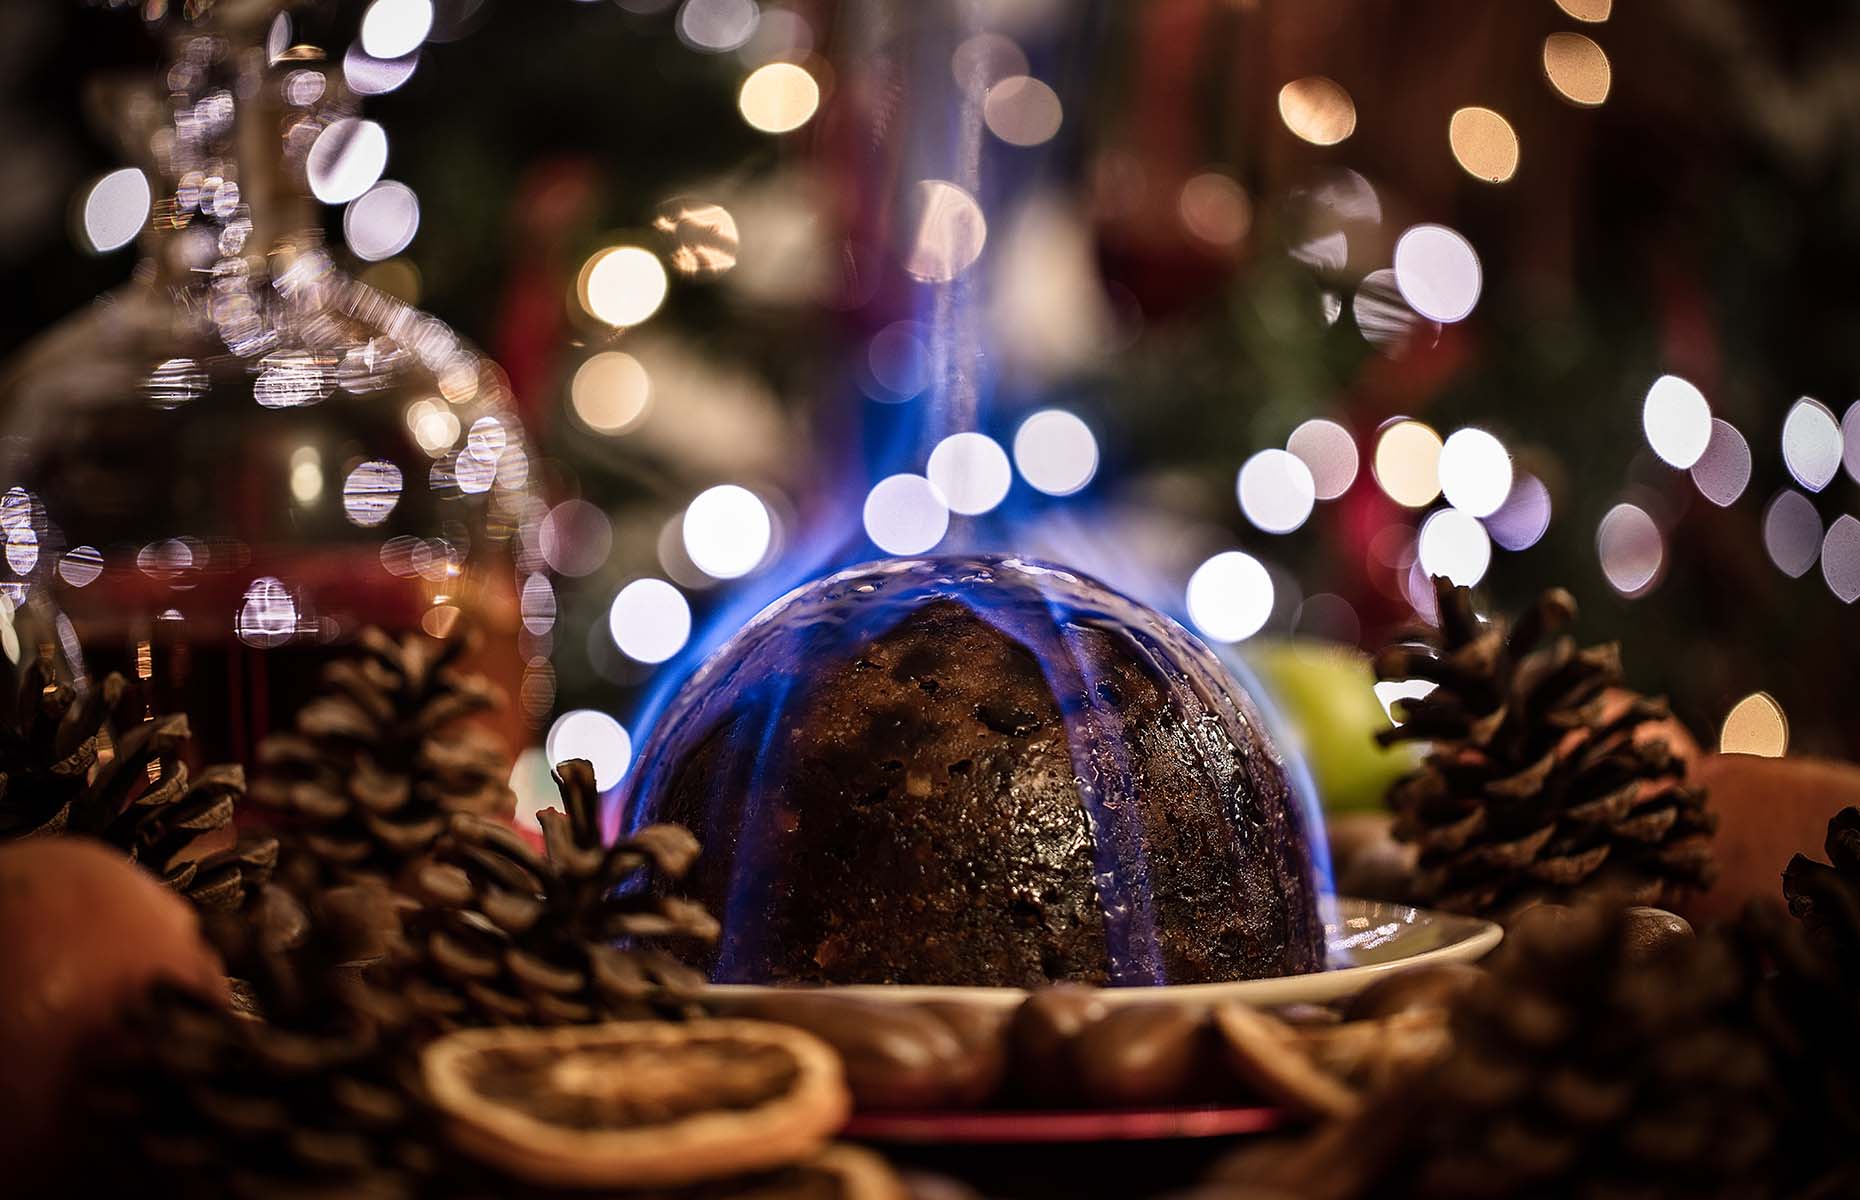 Christmas pudding set on fire (Image: Mark Lister/Shutterstock)